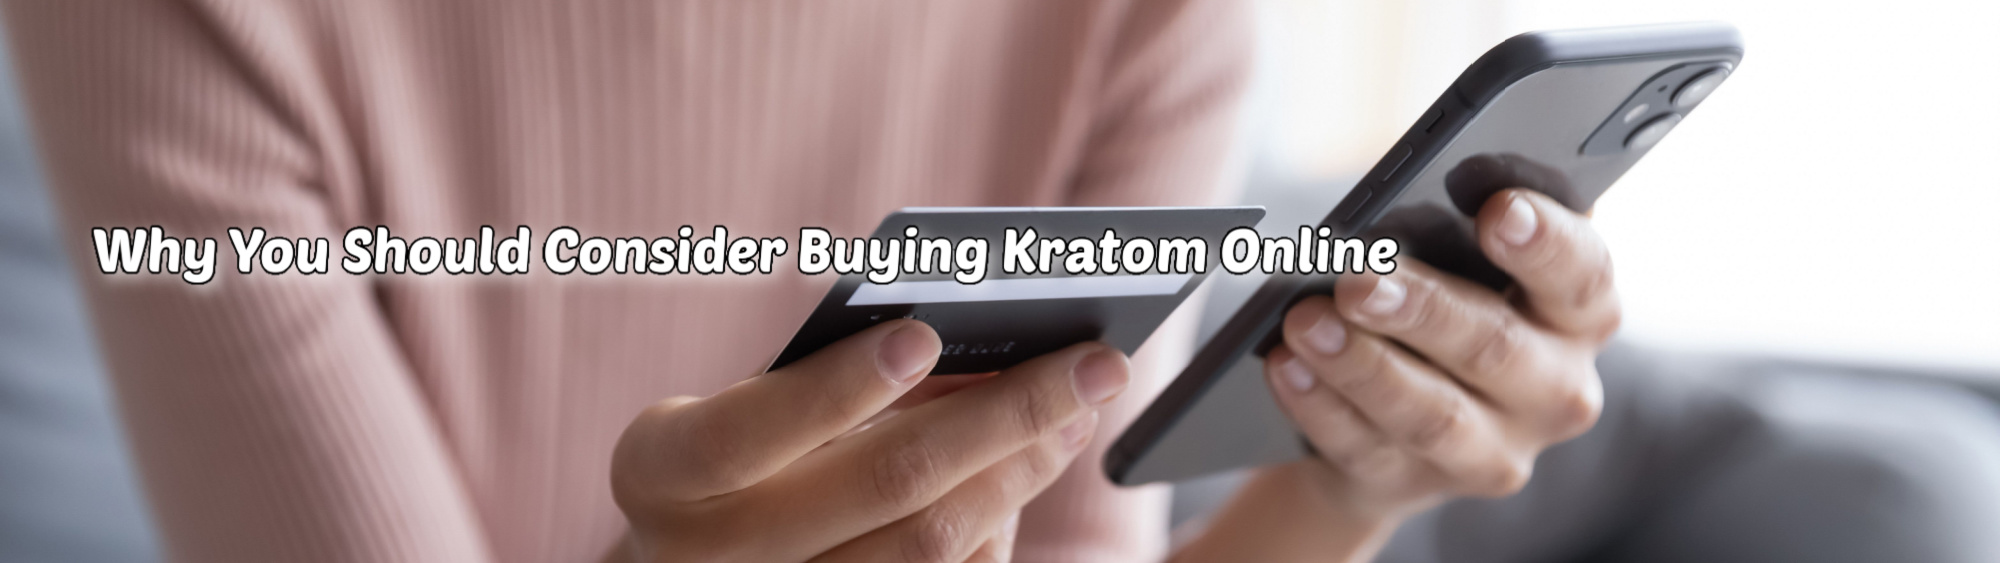 image of buying kratom online